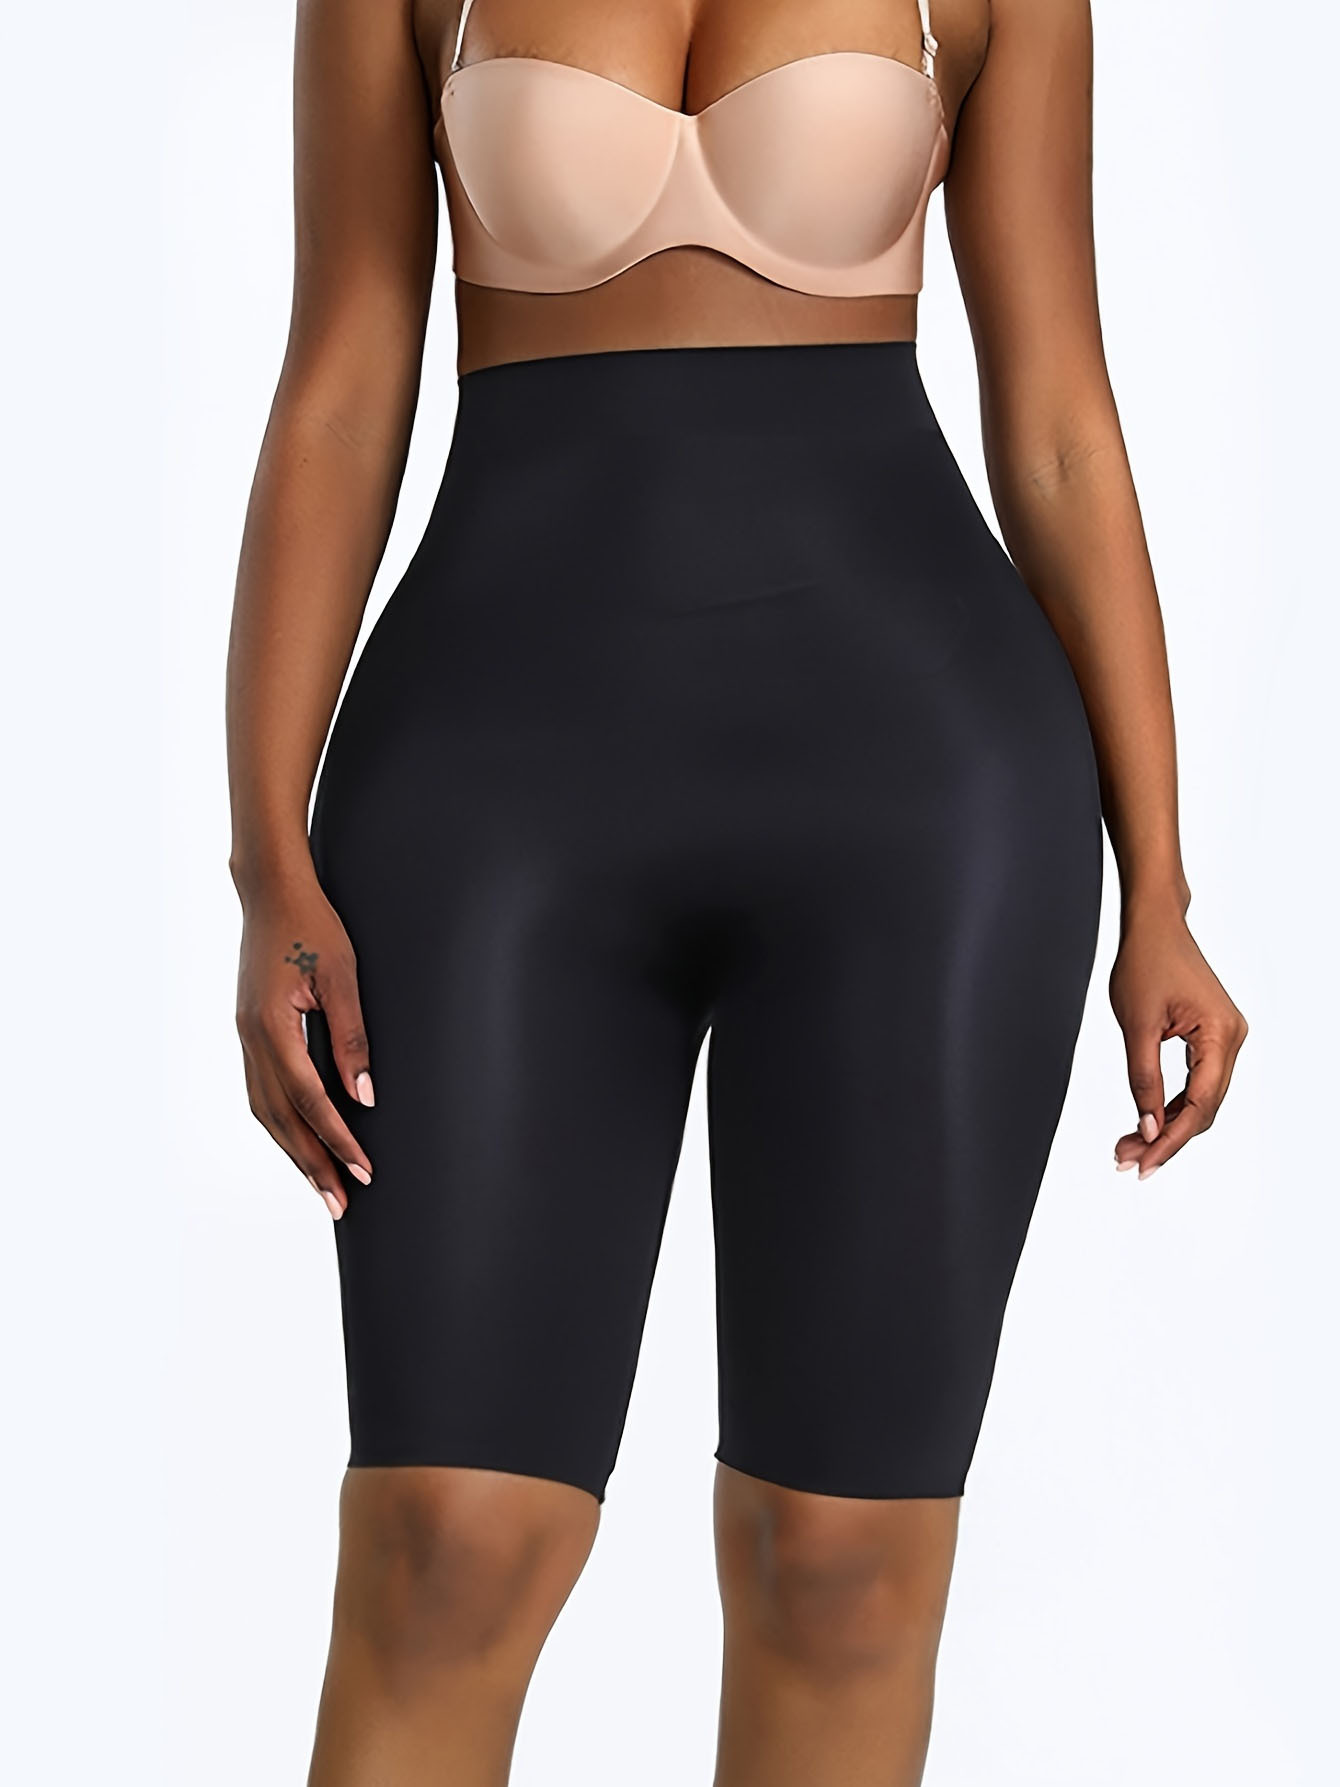 Slip Shorts for Women Under Dresses Seamless Smooth Anti-chafing Boyshorts  Underwear Lace Thigh Panties Safety Shorts, #2 Black+beige+white, S price  in UAE,  UAE